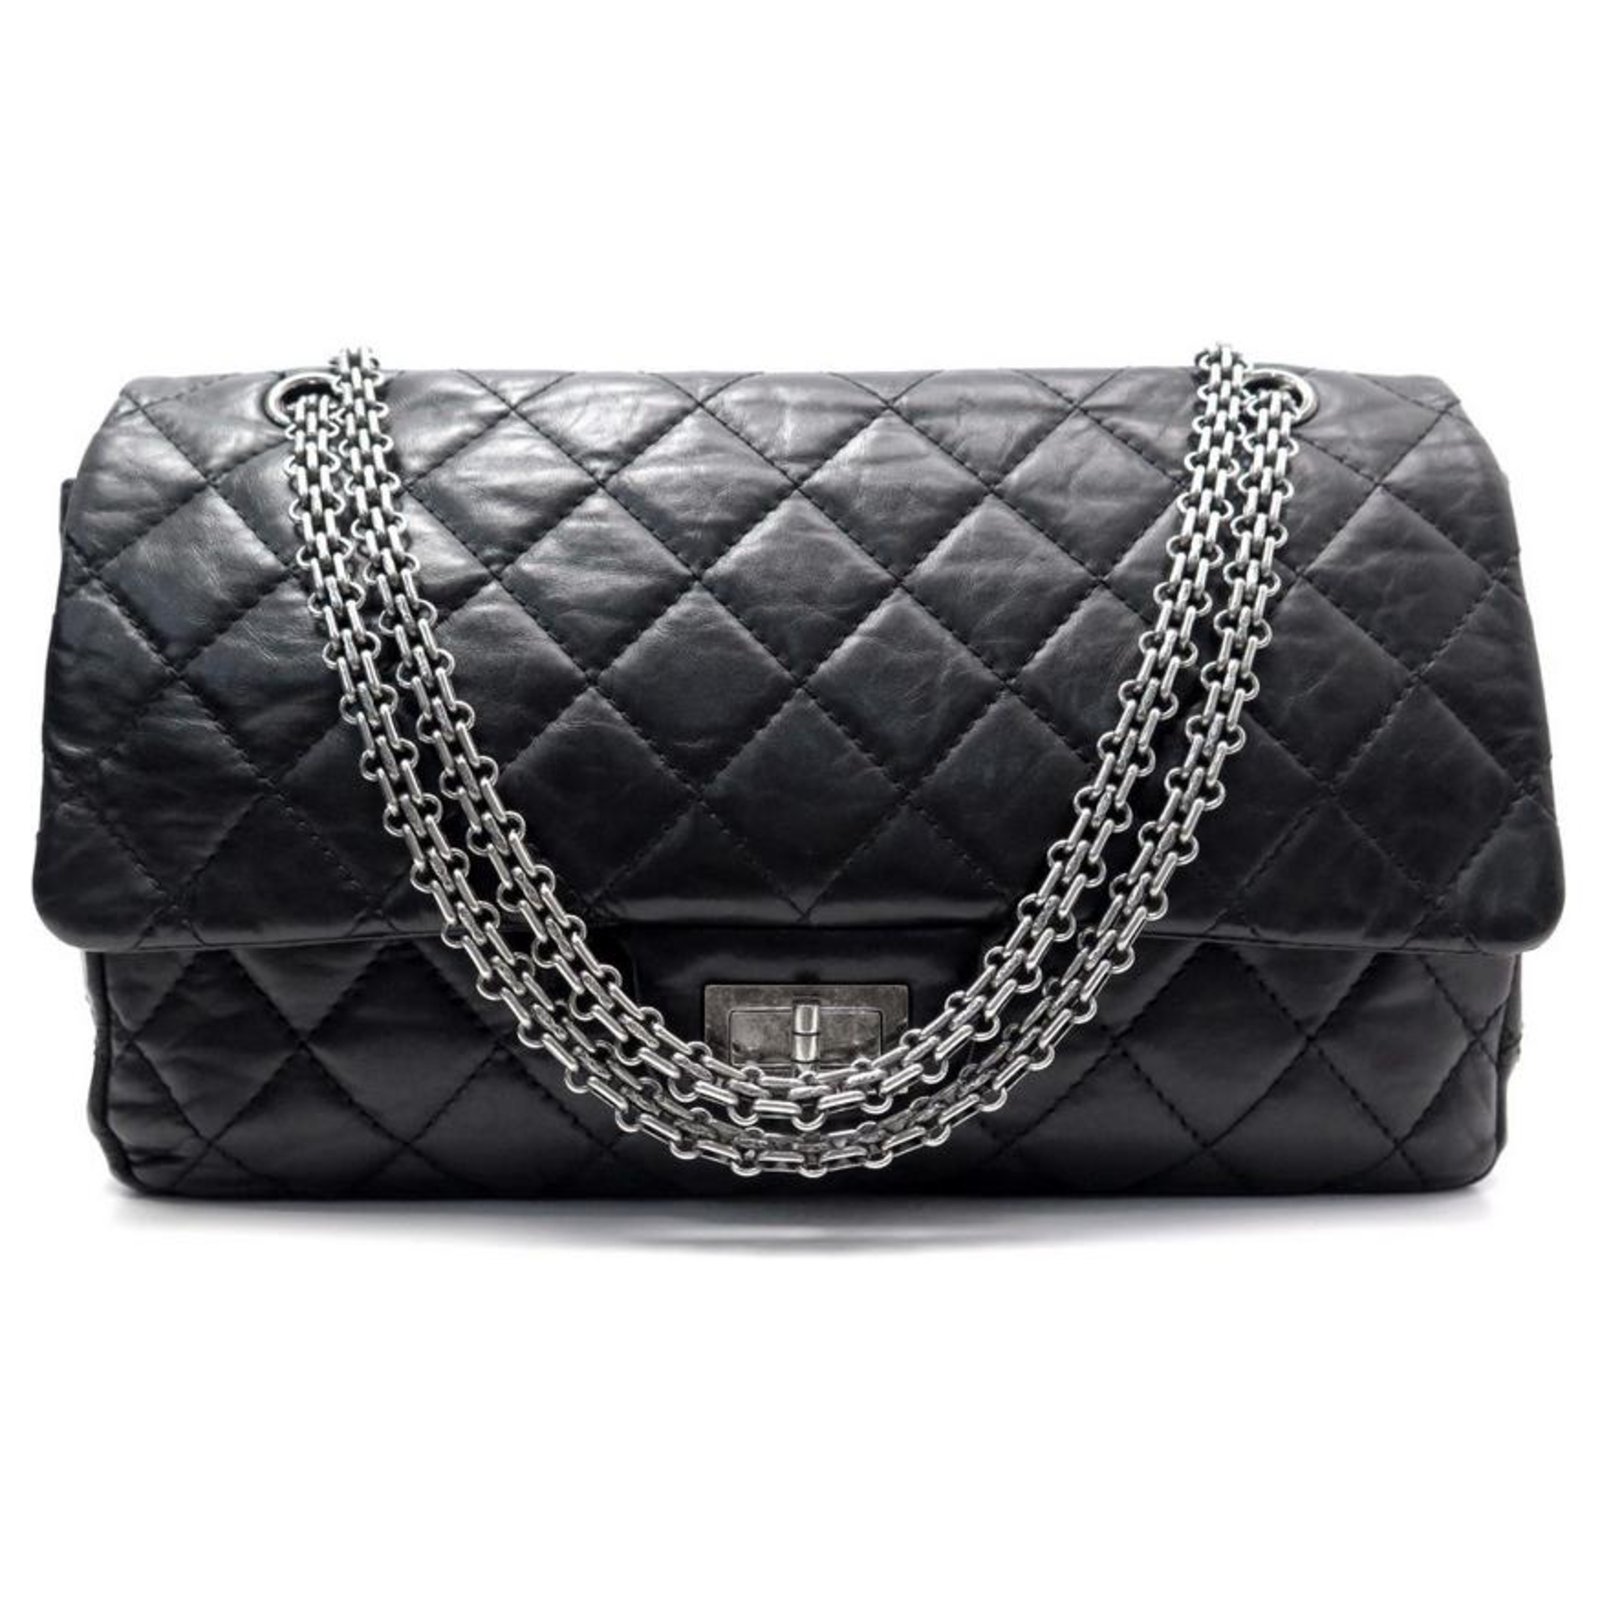 Chanel handbag 2.55 MAXI JUMBO A37590 BLACK LEATHER STRAP + BOX ref ...